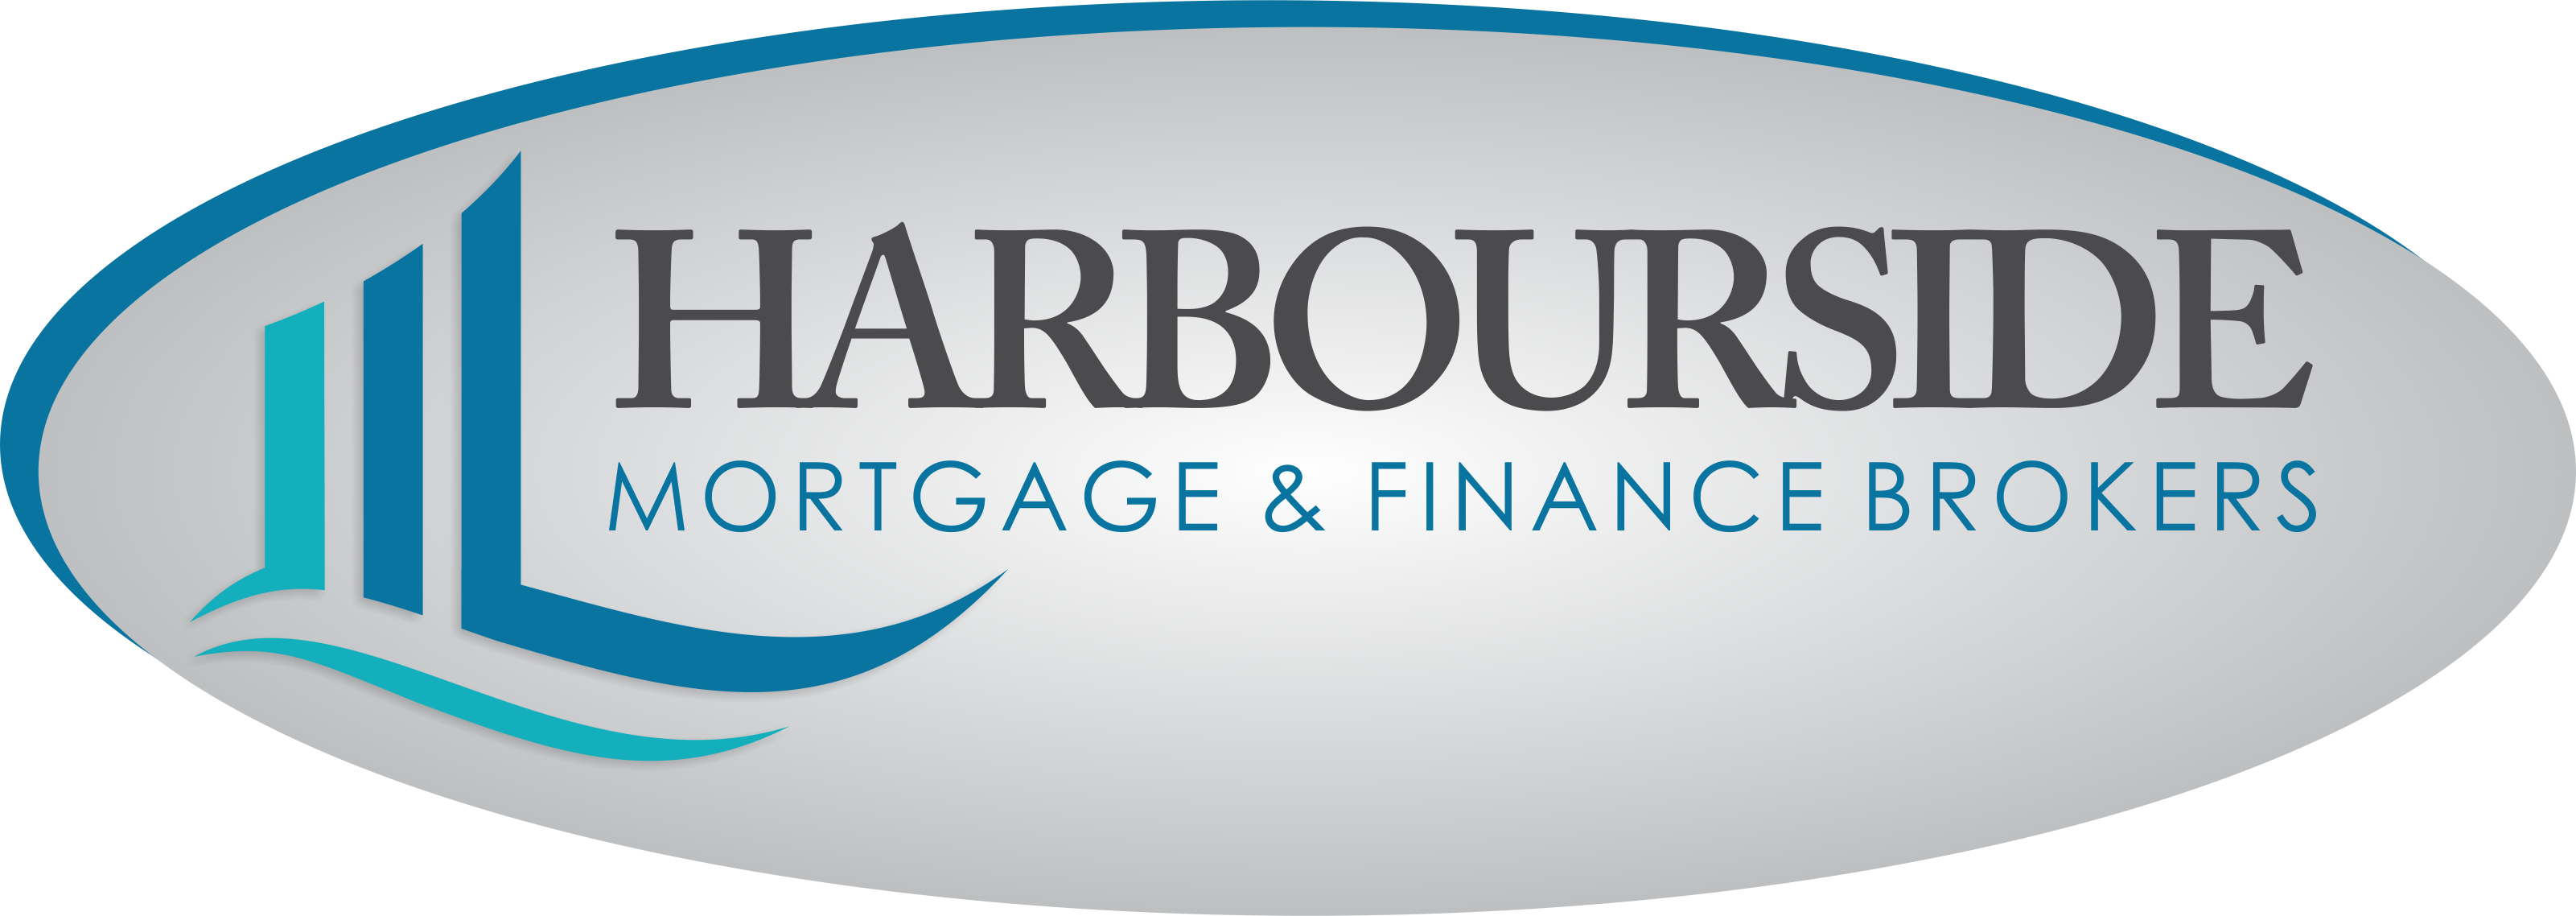 Harbourside Mortgage and Finance Brokers Logo